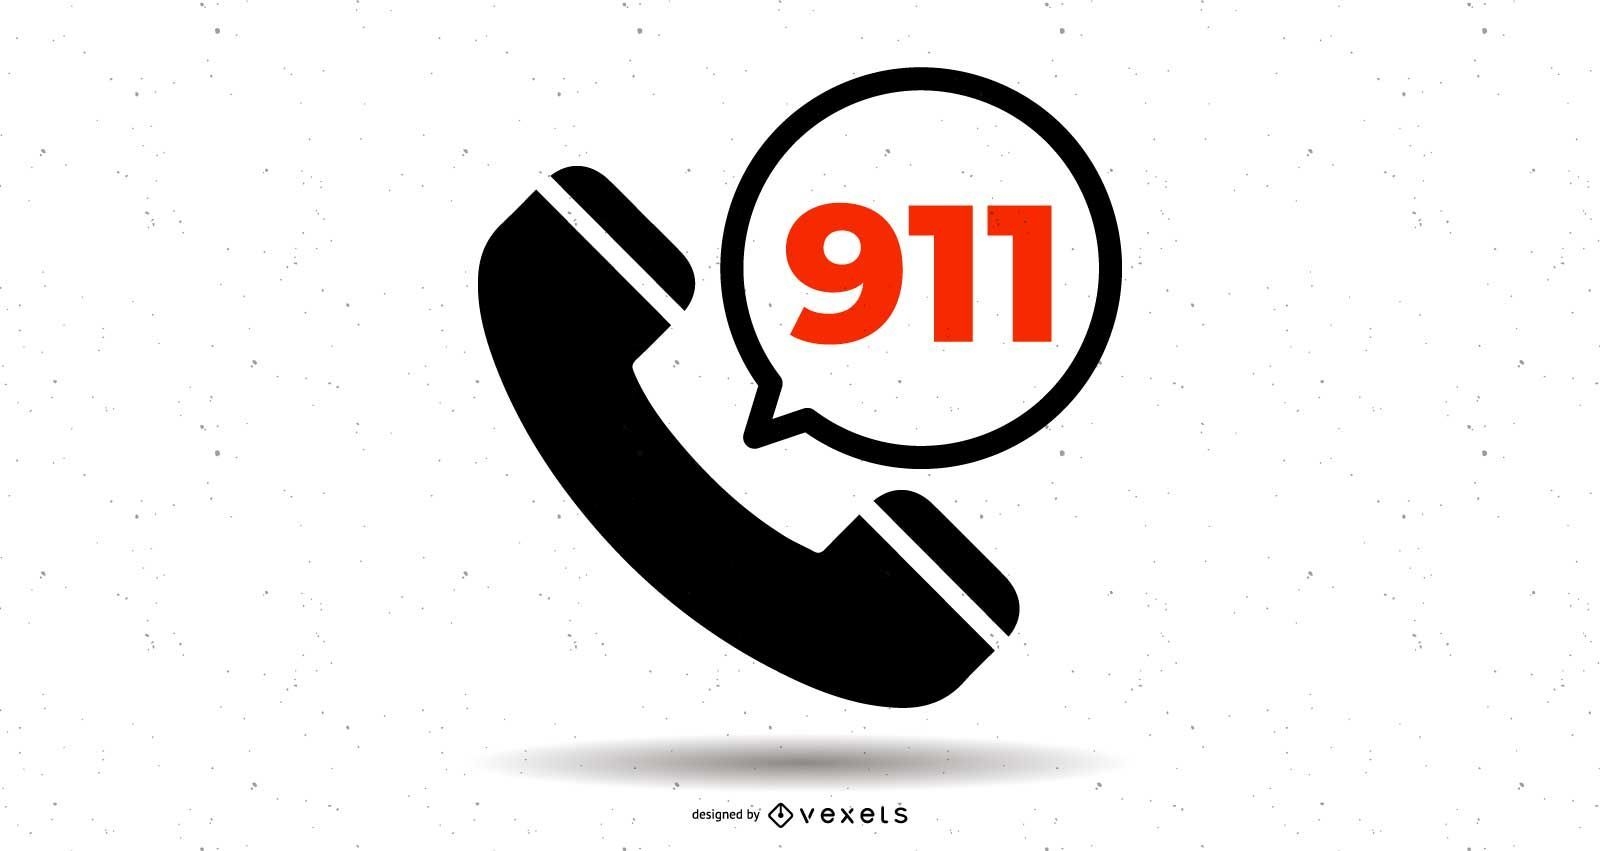 911 Telefon-Hotline-Symbol